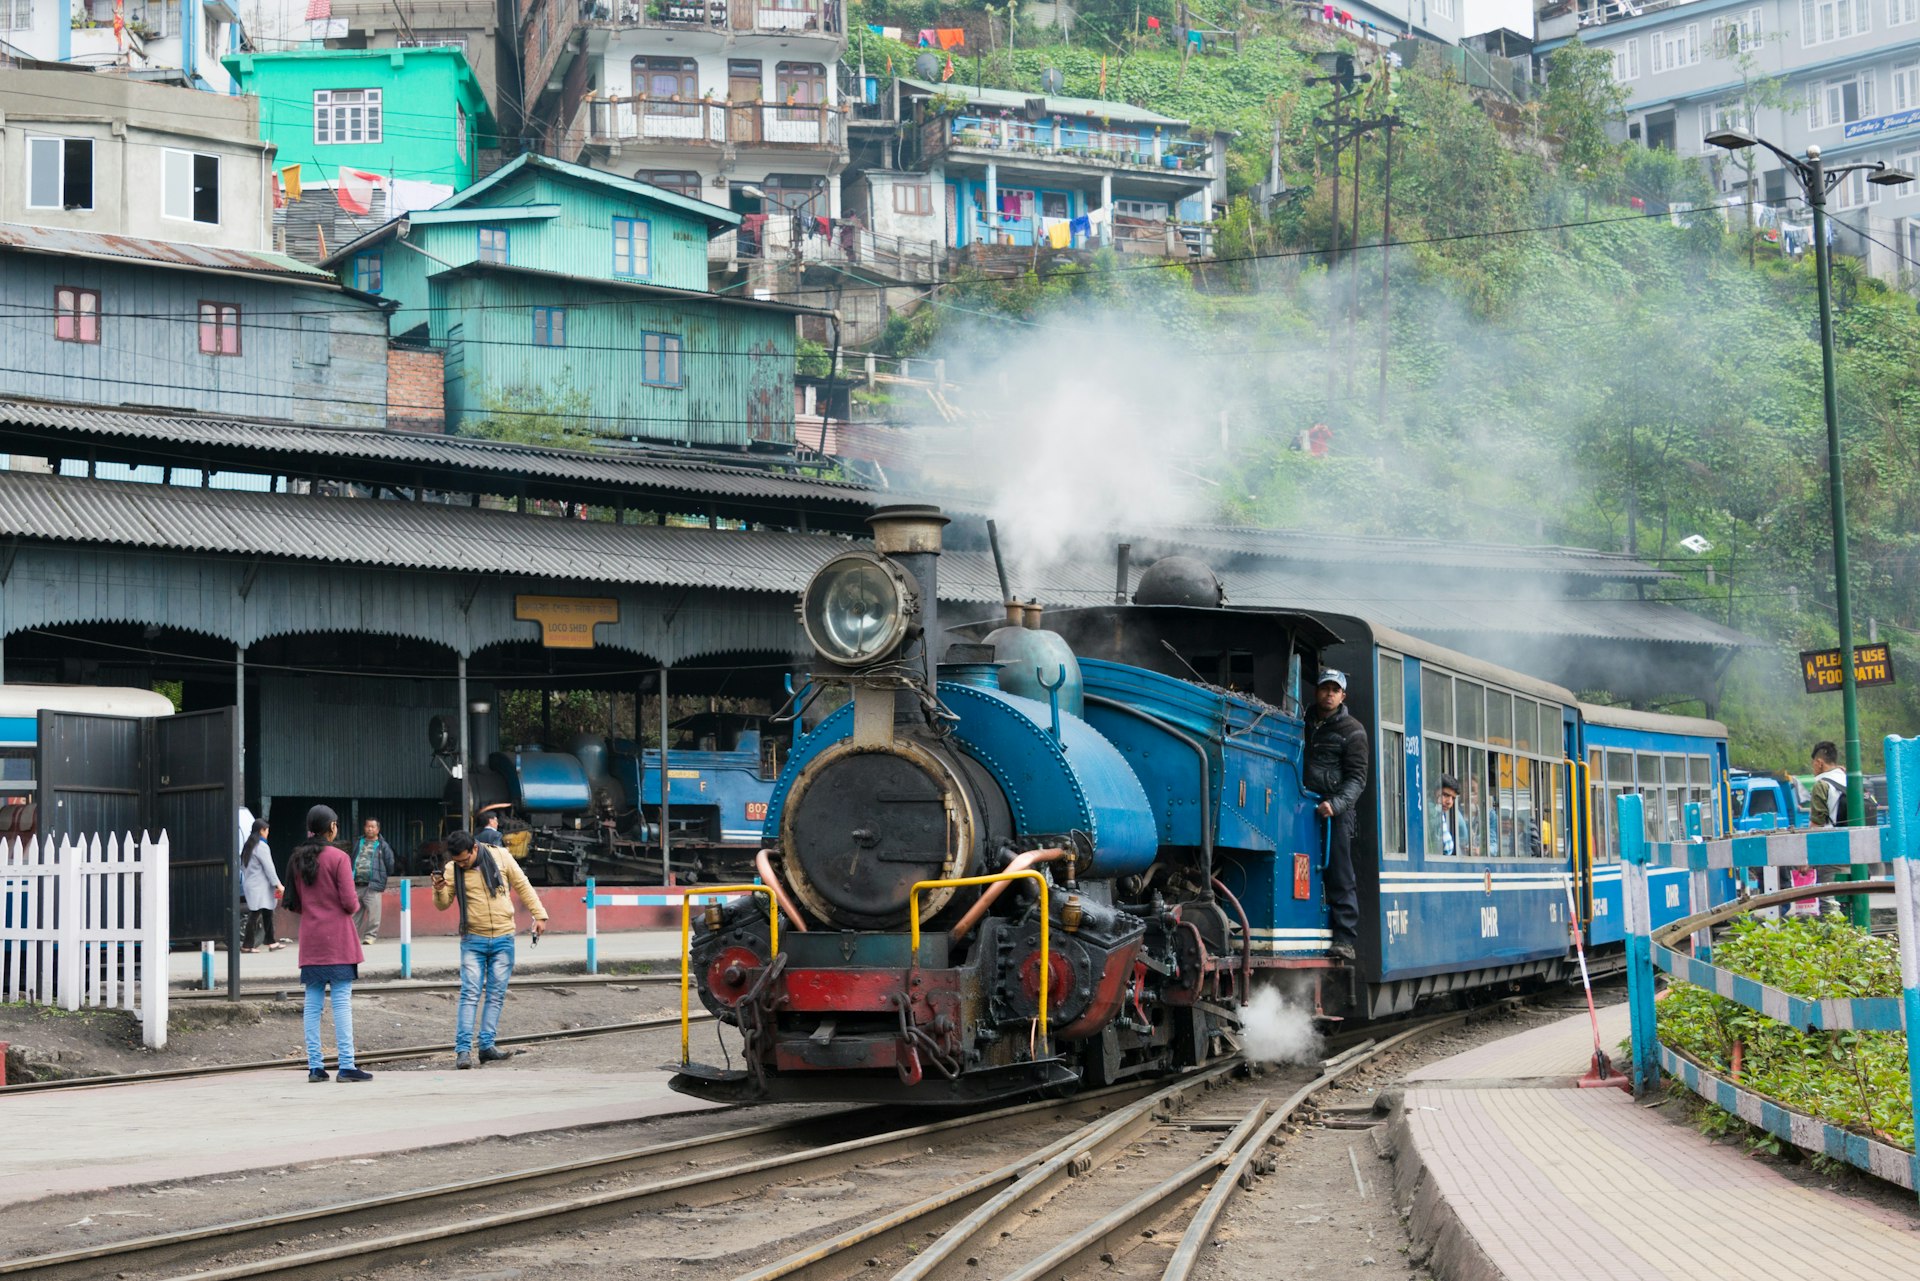 The toy train rolls into Darjeeling Railway Station